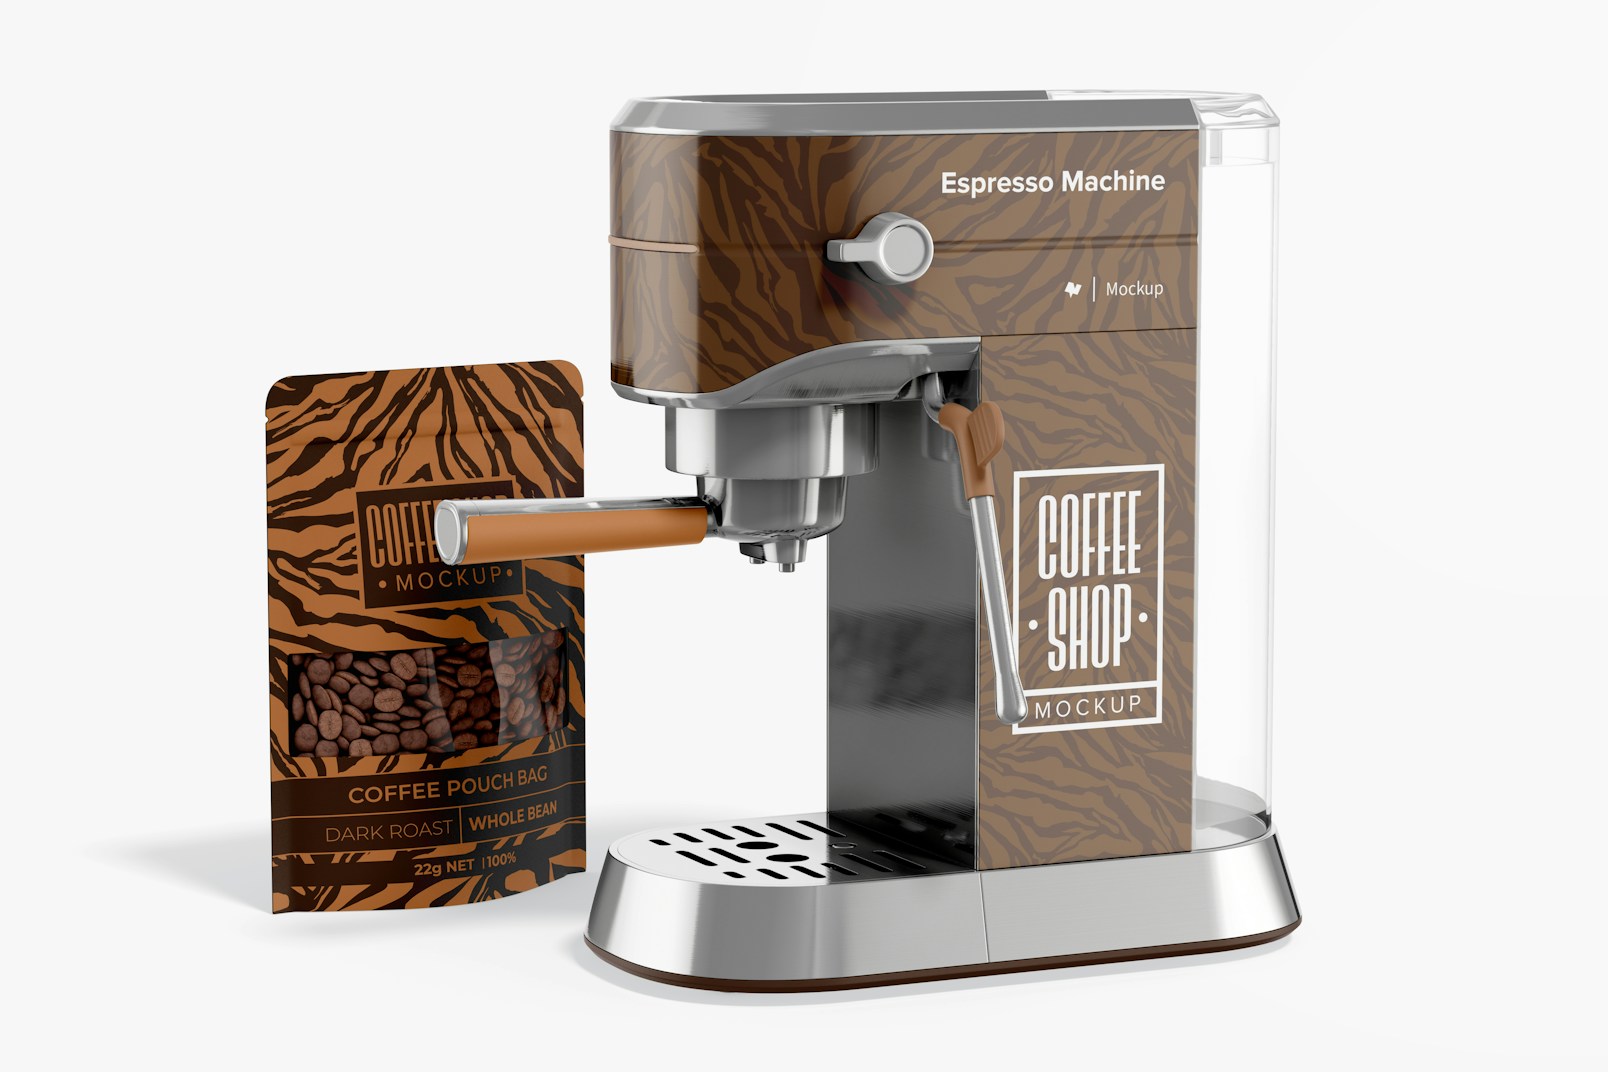 Espresso Machine Mockup, with Coffee Bagmoder